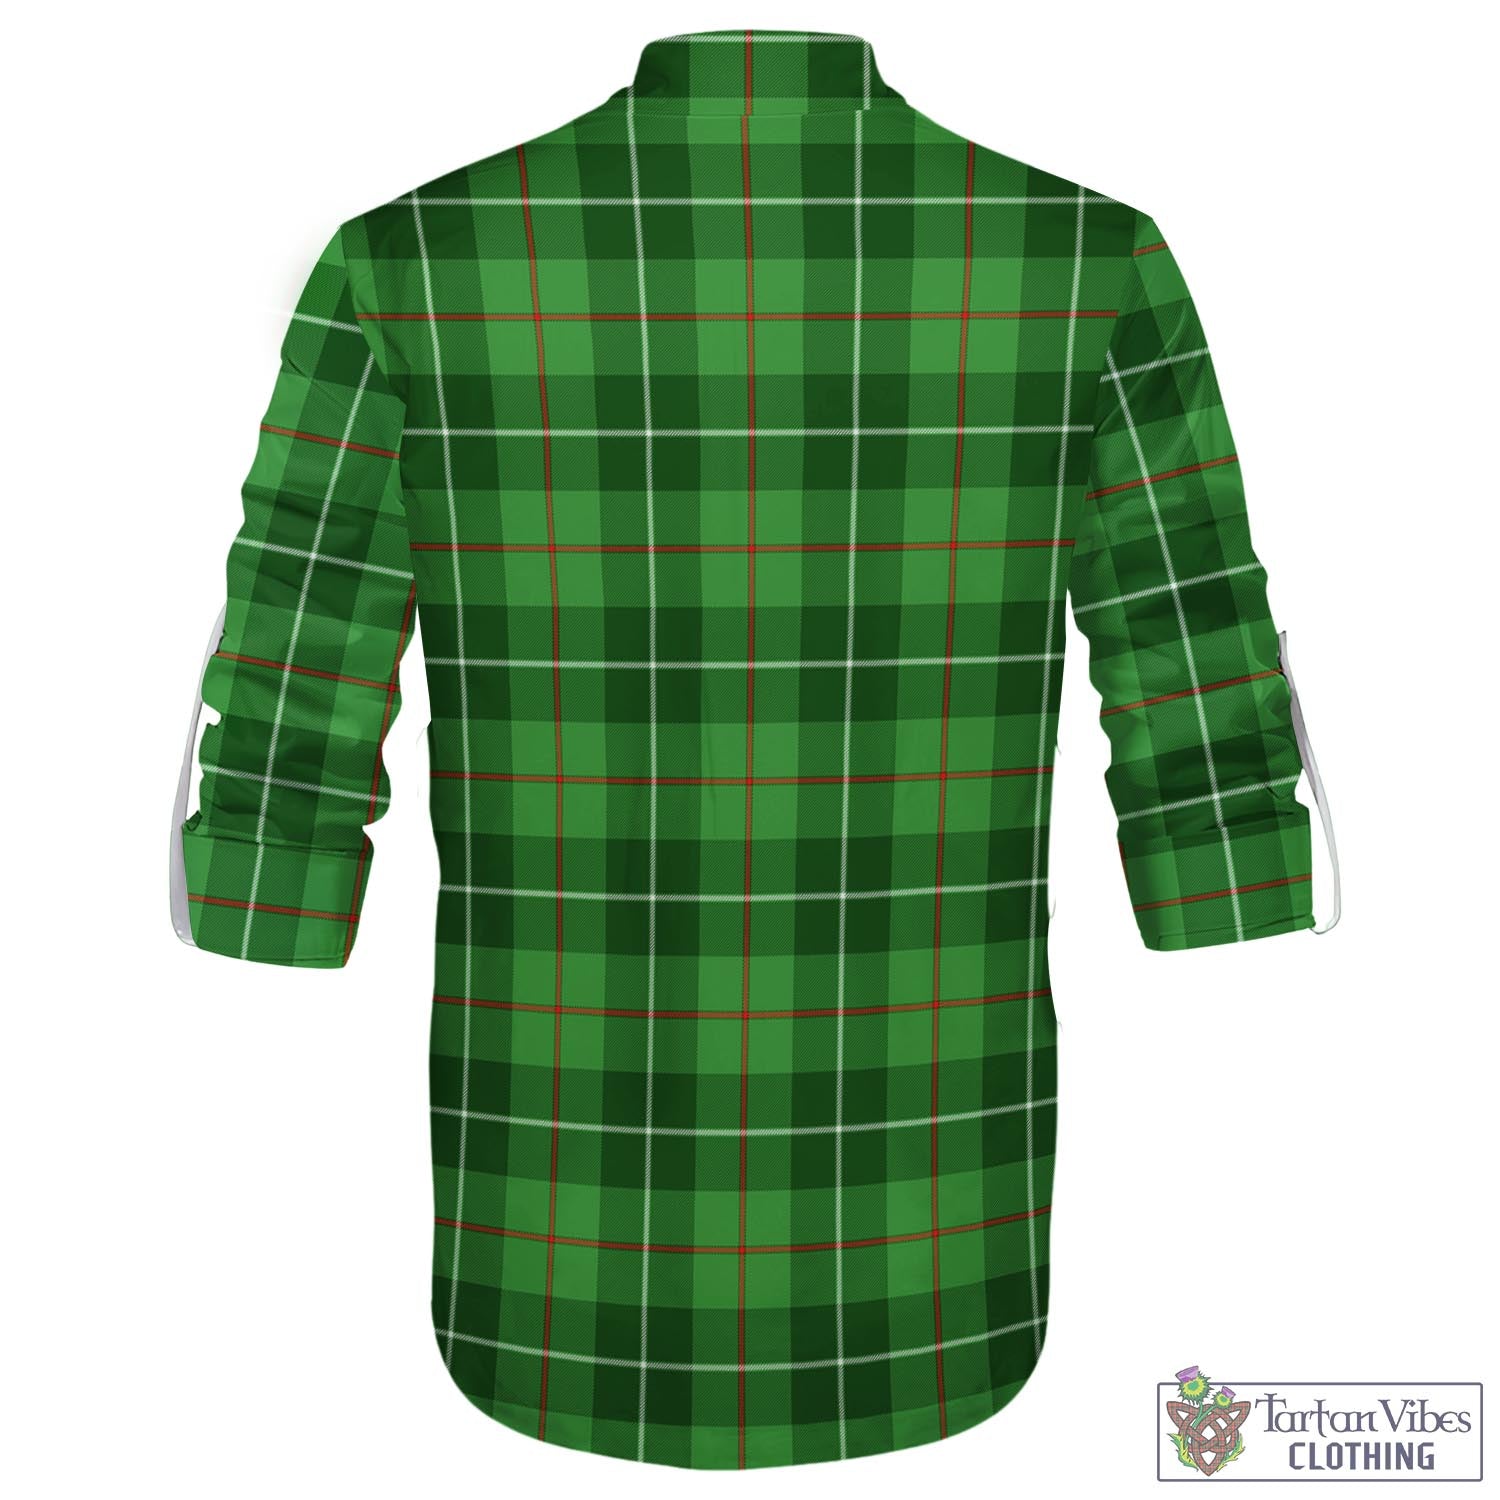 Tartan Vibes Clothing Clephan Tartan Men's Scottish Traditional Jacobite Ghillie Kilt Shirt with Family Crest